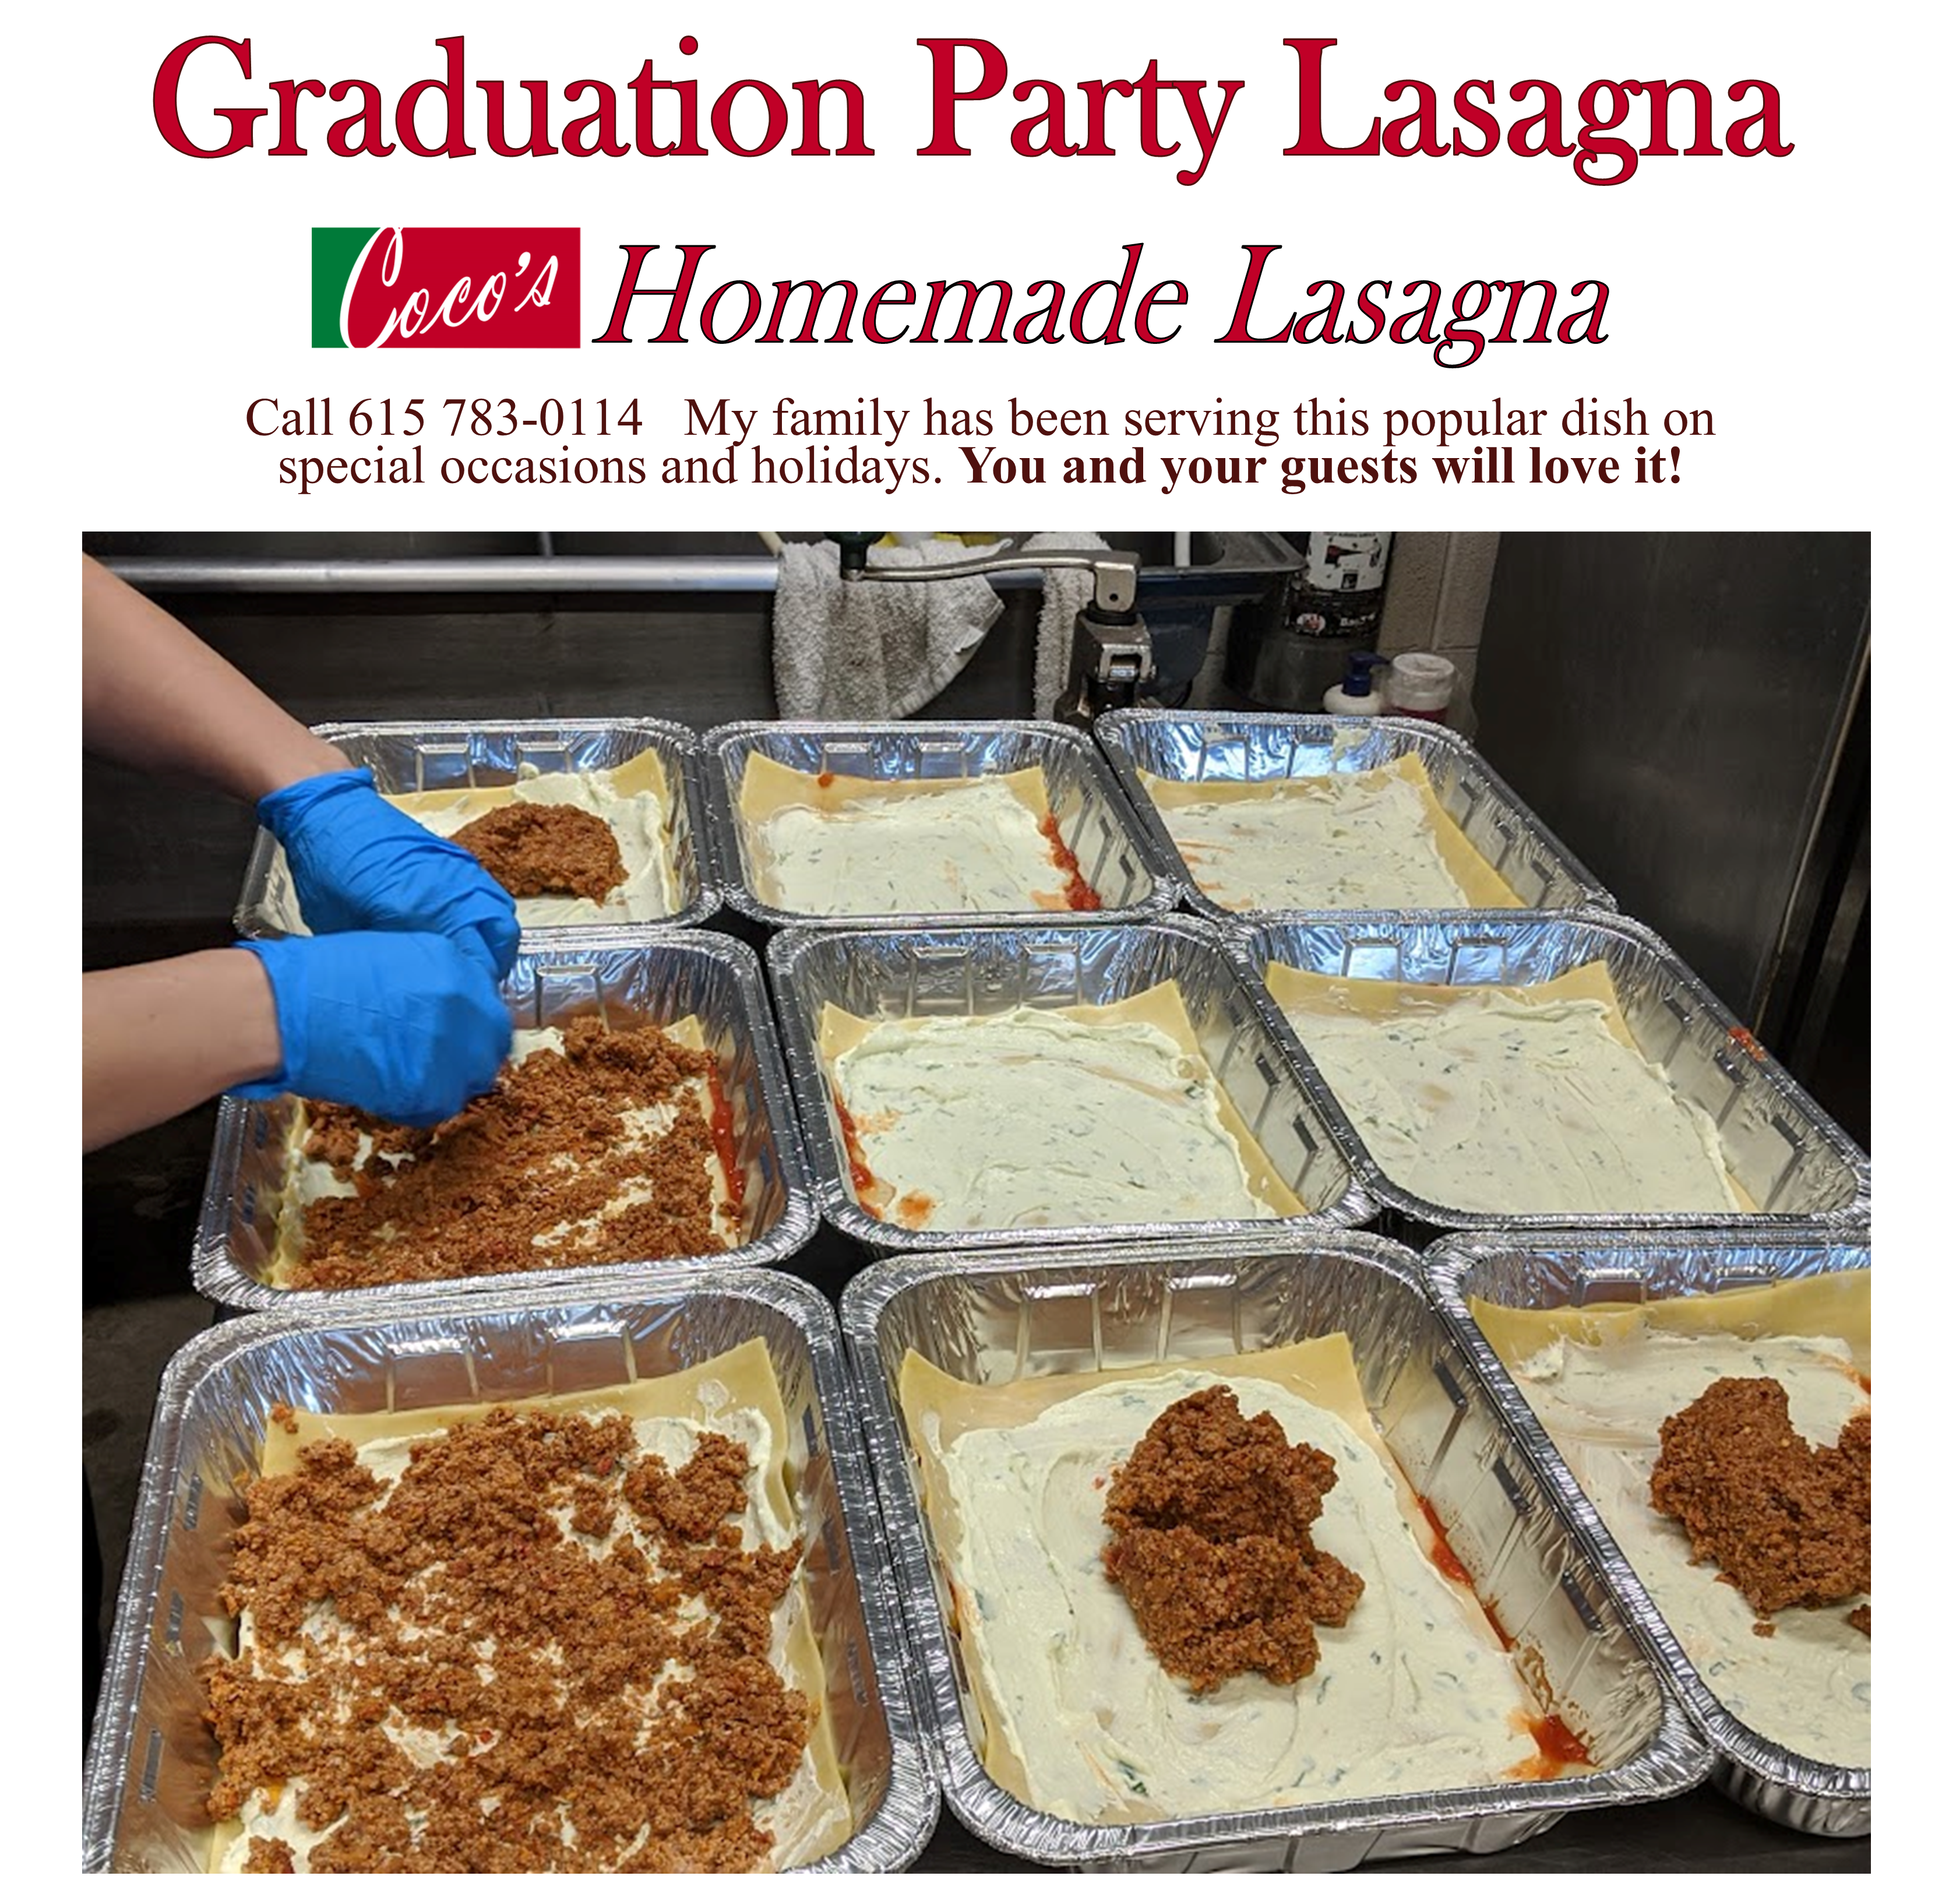 Graduation Lasagna being made at Coco's Italian